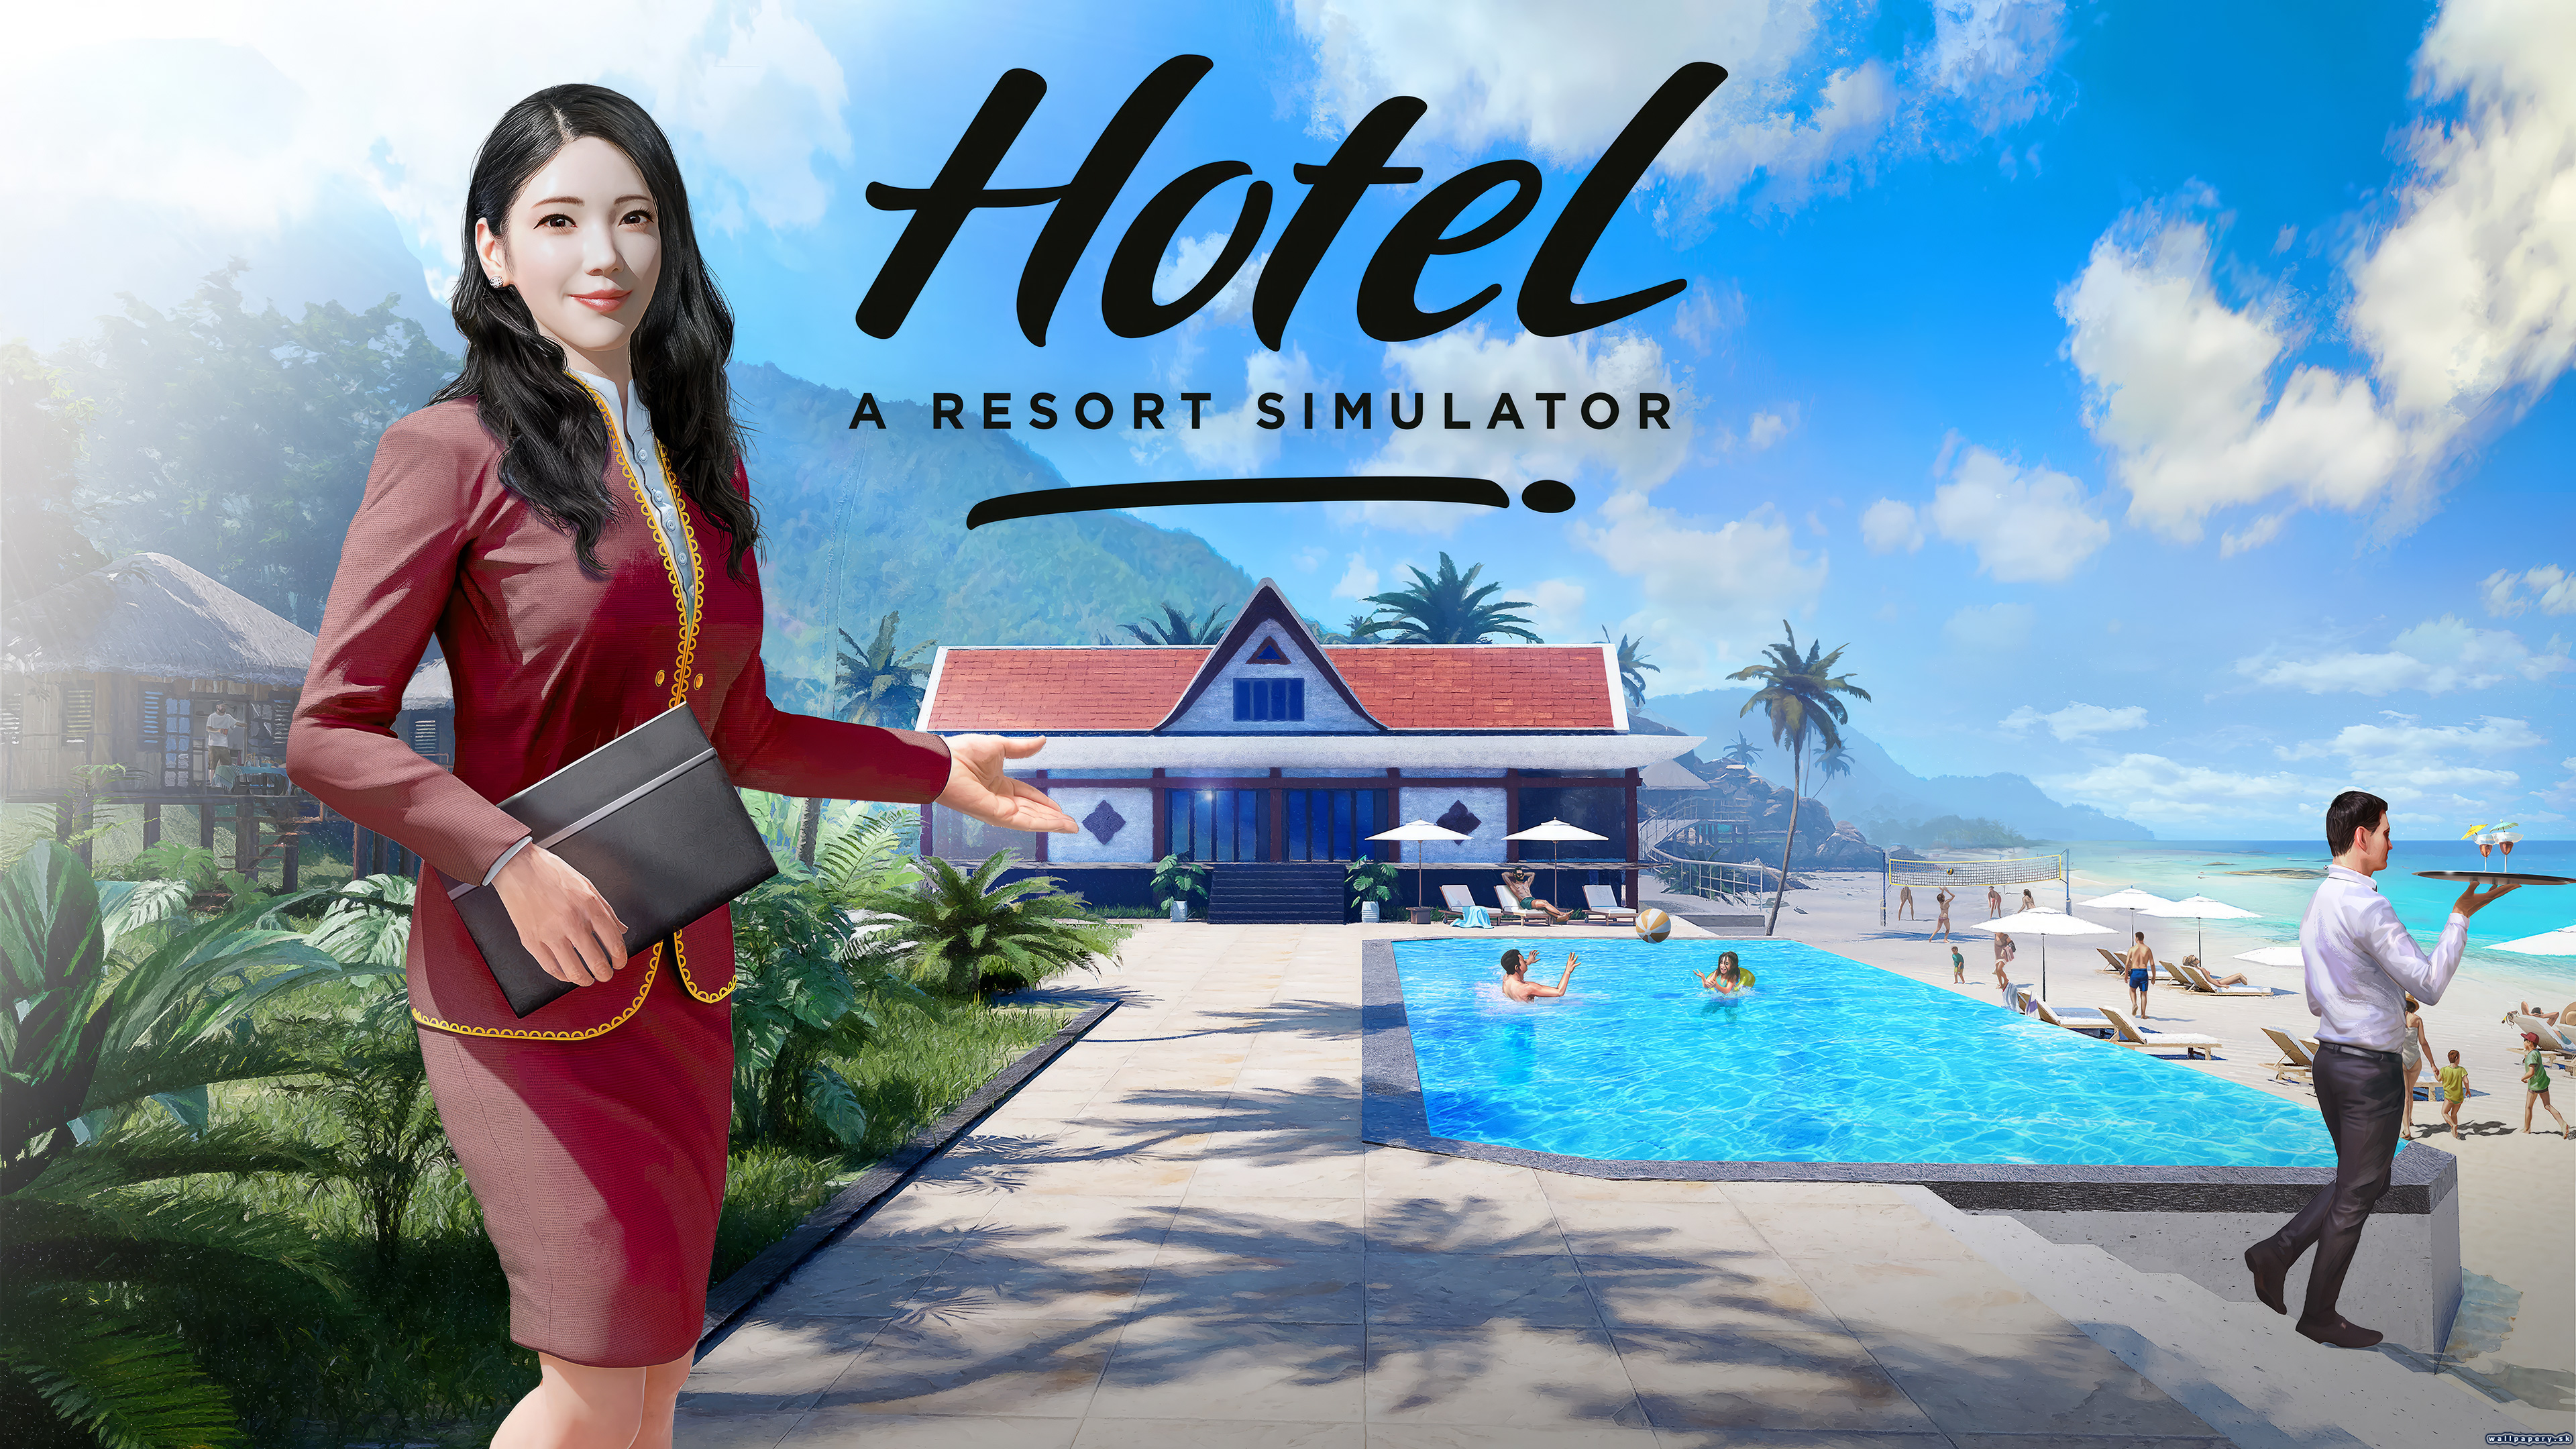 Hotel: A Resort Simulator - wallpaper 1